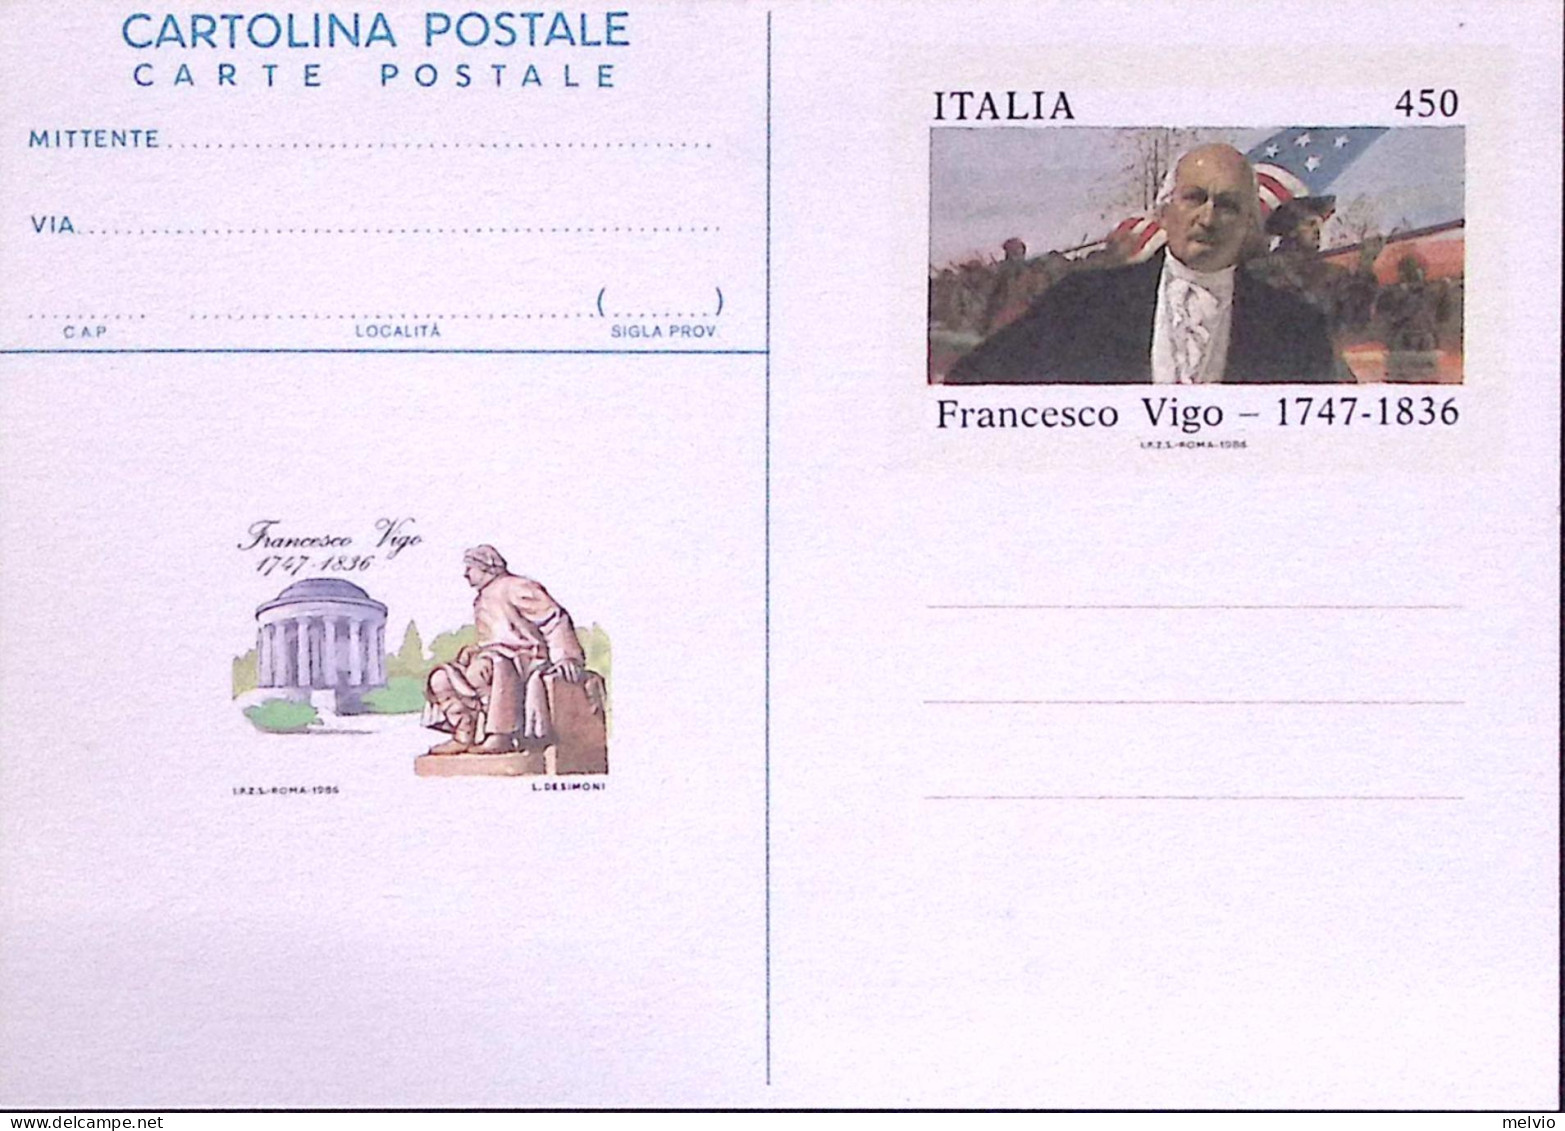 1986-Cartolina Postale Lire 450 Francesco Vigo Nuova - Ganzsachen